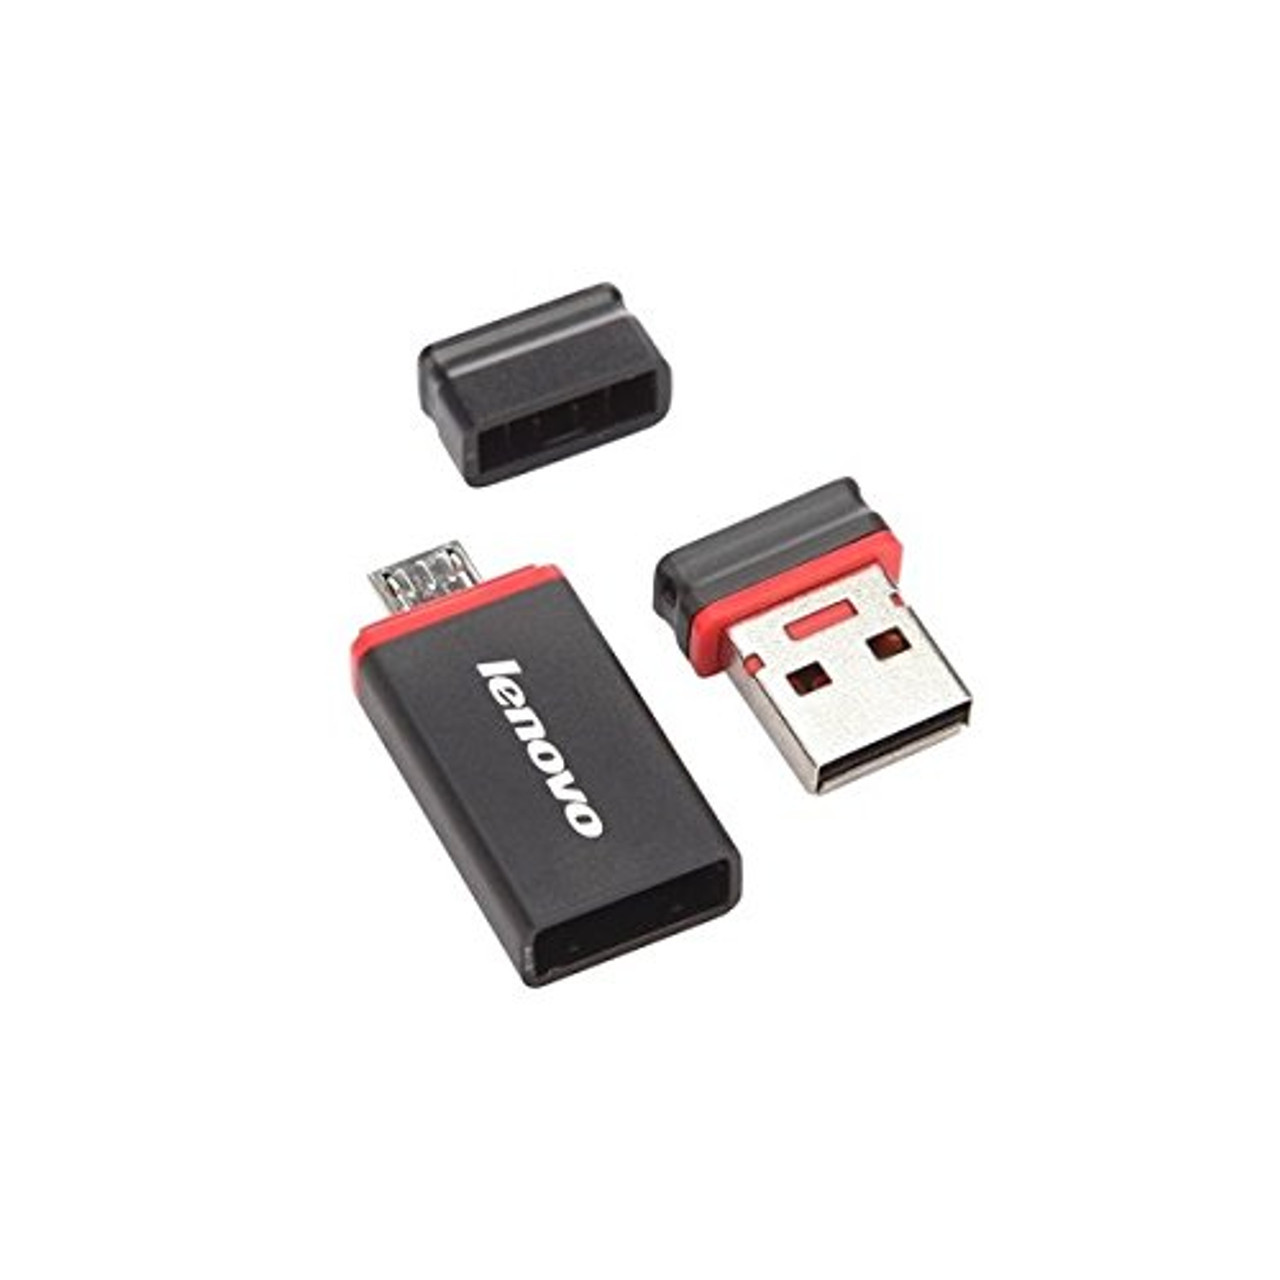 Lenovo OTG USB Flash Drive C590 16GB | 888016098 | AYOUB COMPUTERS | LEBANON